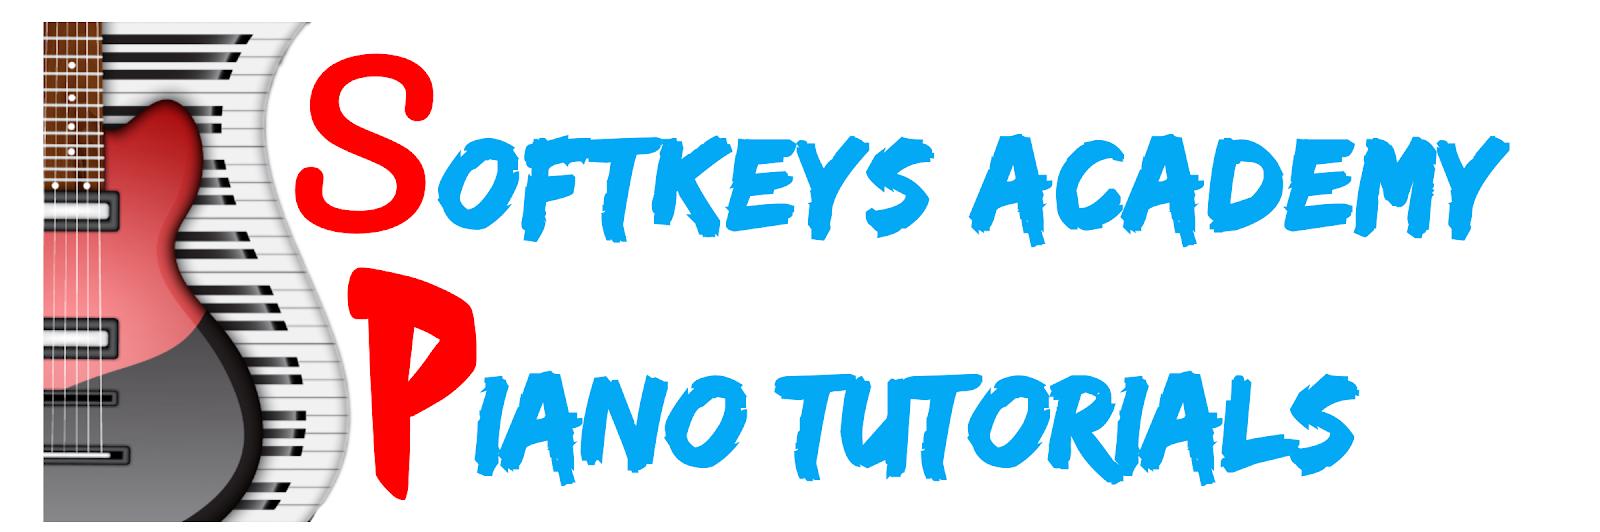 Softkeys Academy Piano Lessons